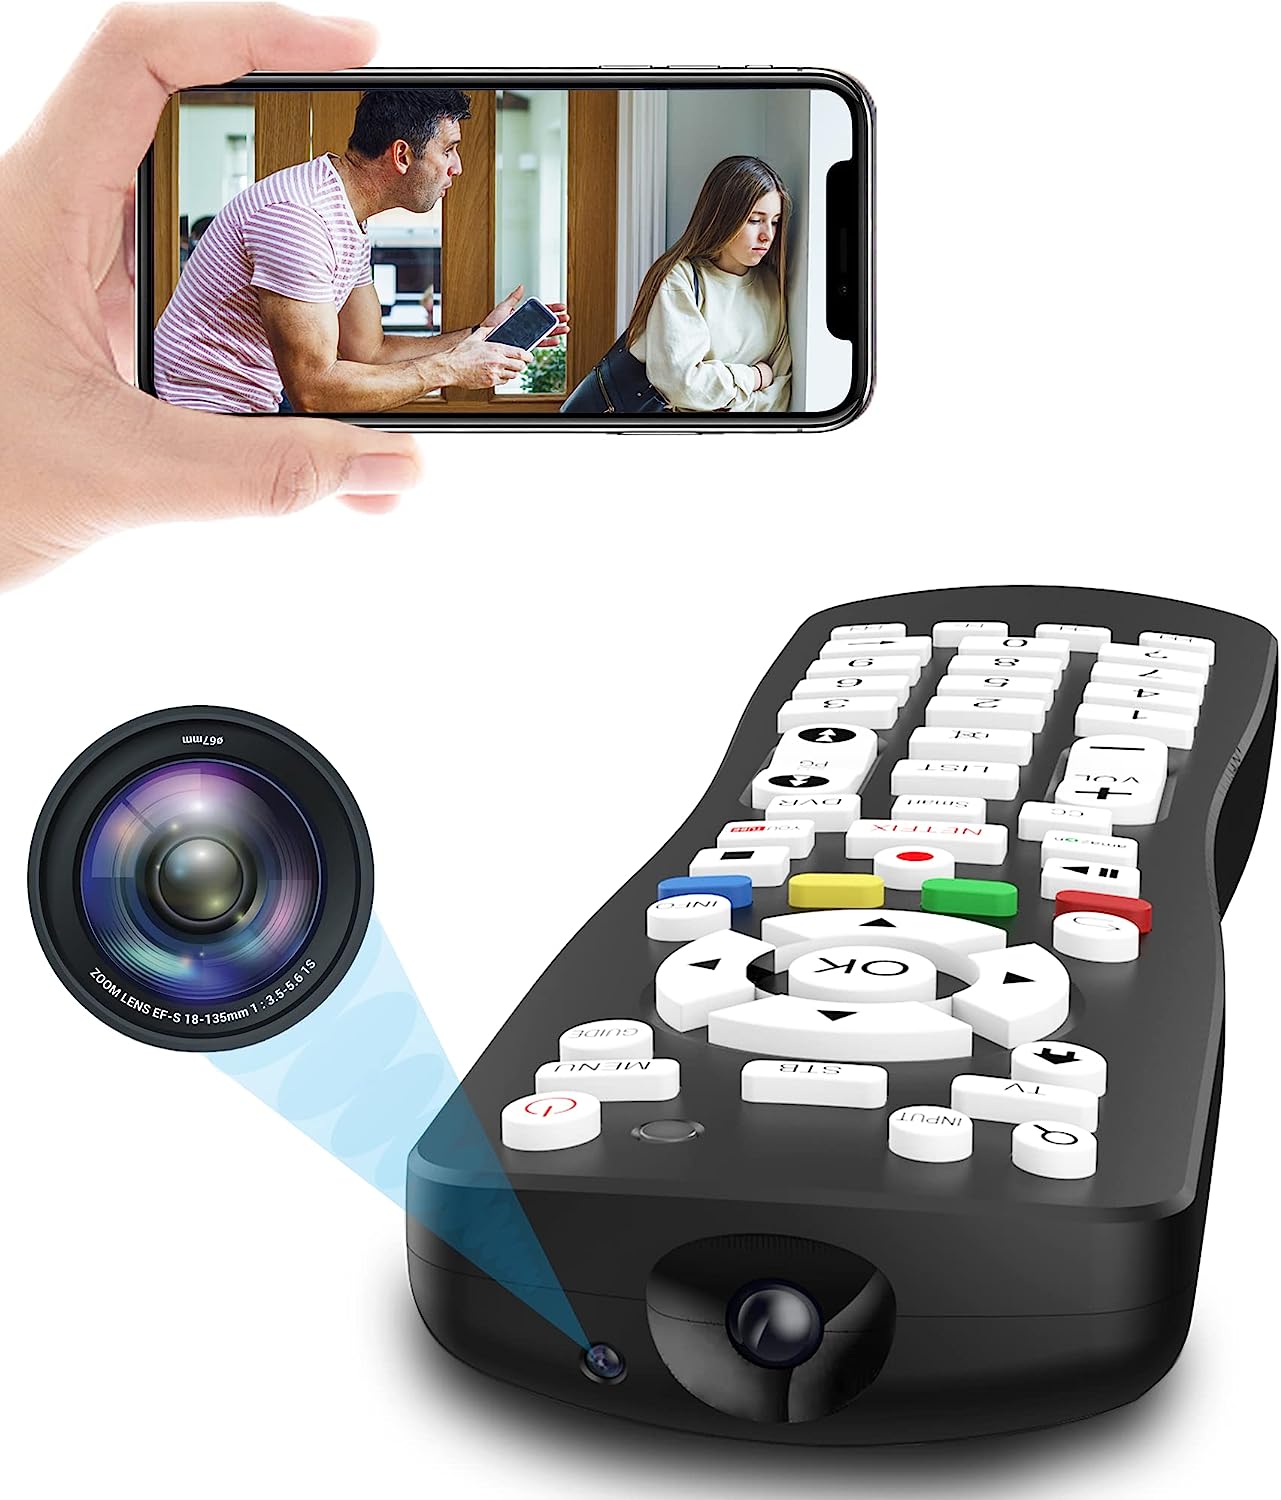 https://spycamcentral.com/wp-content/uploads/2023/03/Obdeprlone-TV-Remote-Control-Hidden-Camera.jpg